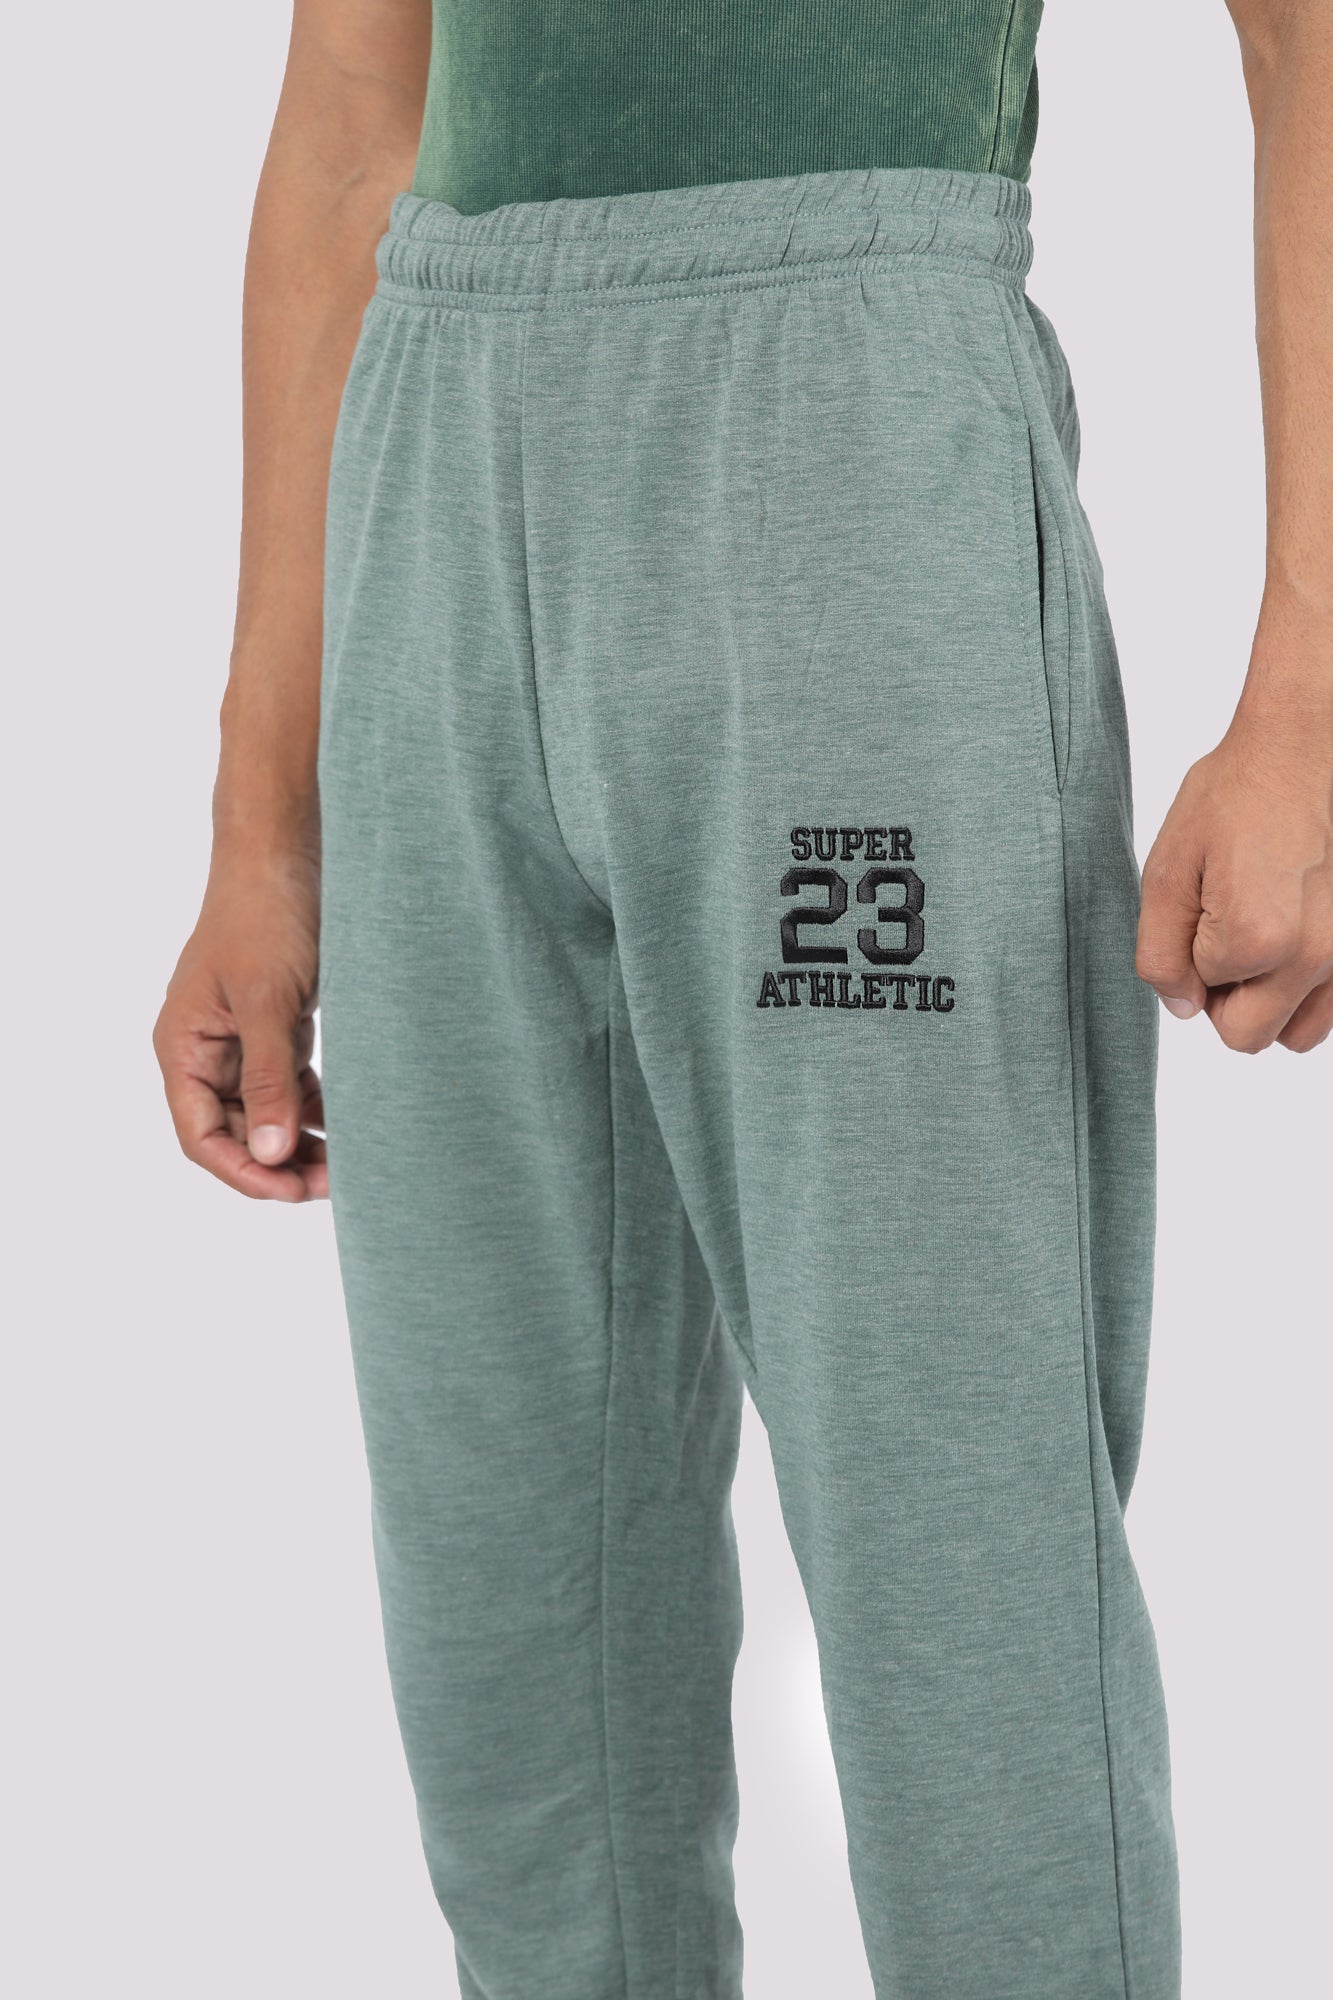 23 Athletic Trouser